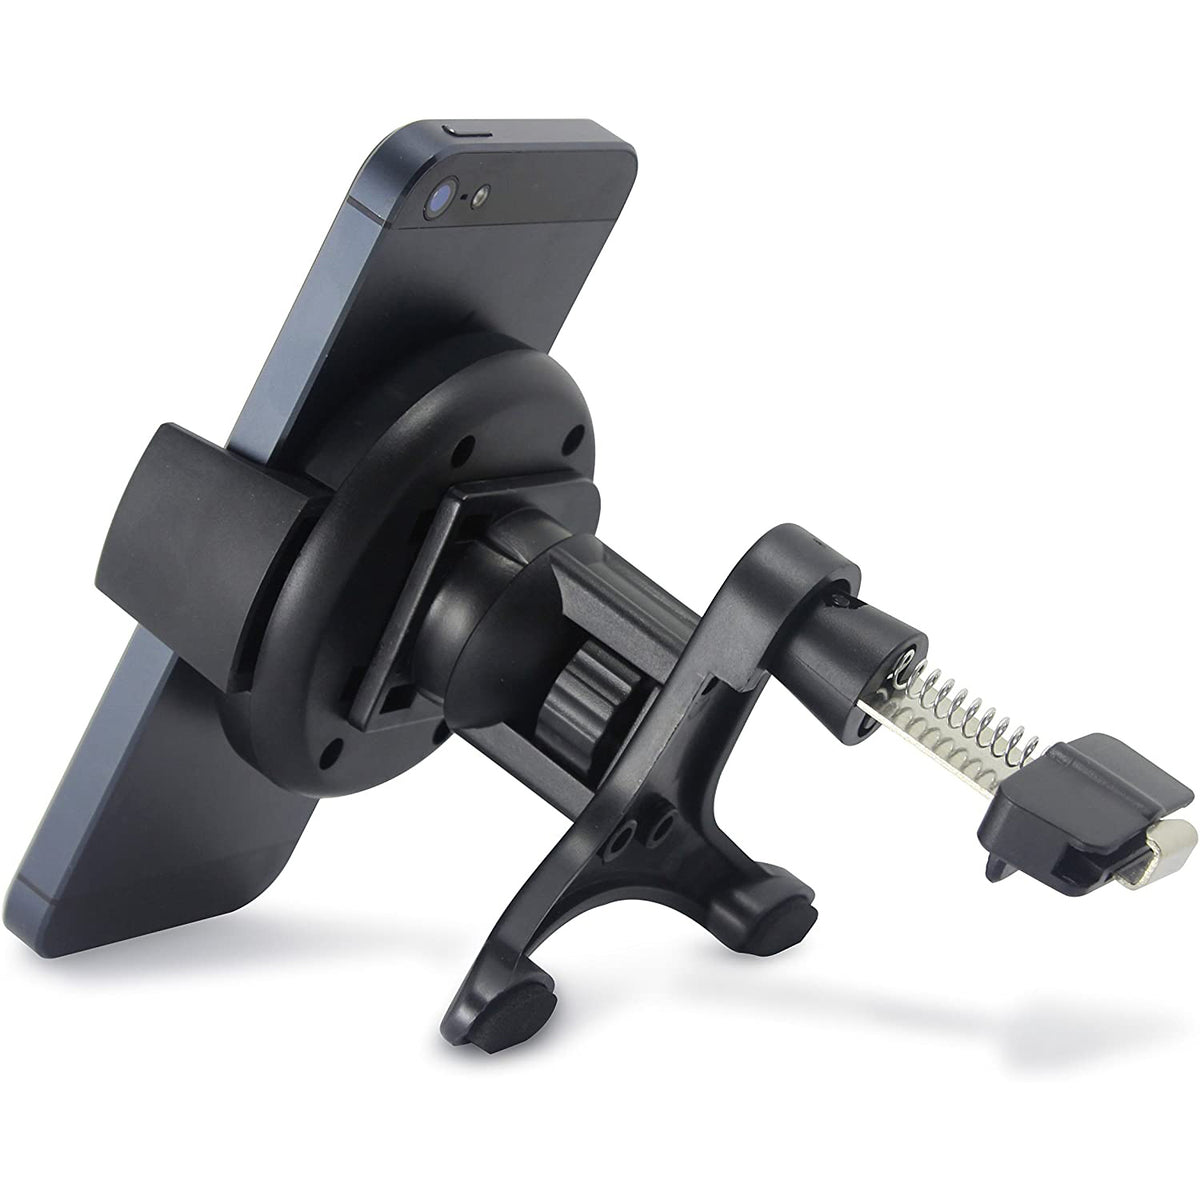 Car Mount Pro Grip Vent Universal Holder Cradle for iPhone & Samsung Phones